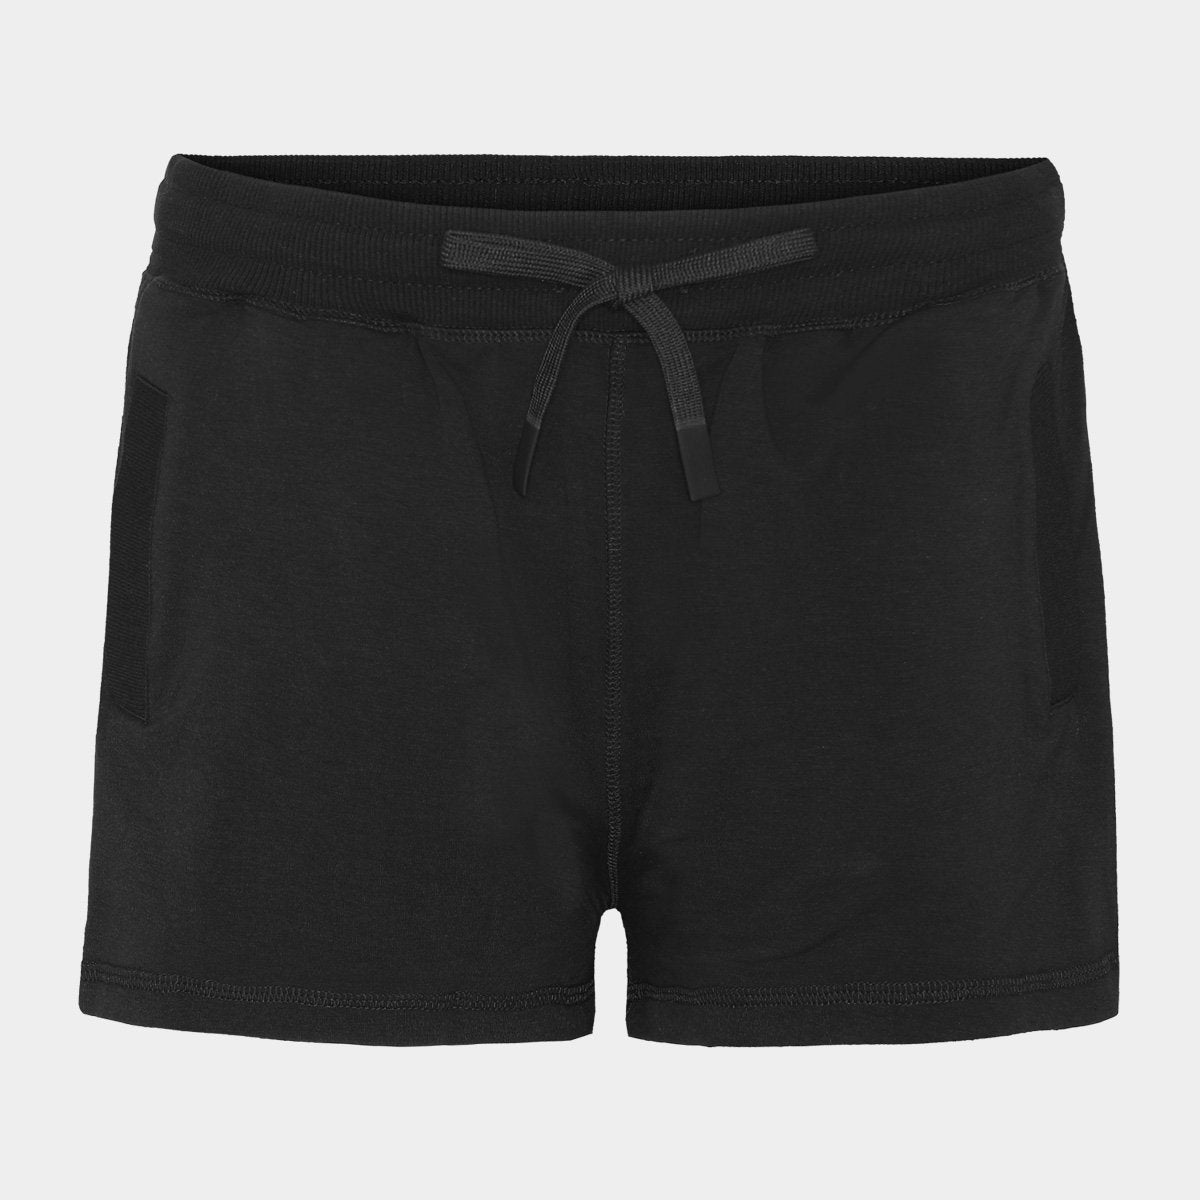 Se Bambus sweatshorts | sorte sweat shorts til damer fra Boody, XS hos Bambustøj.dk